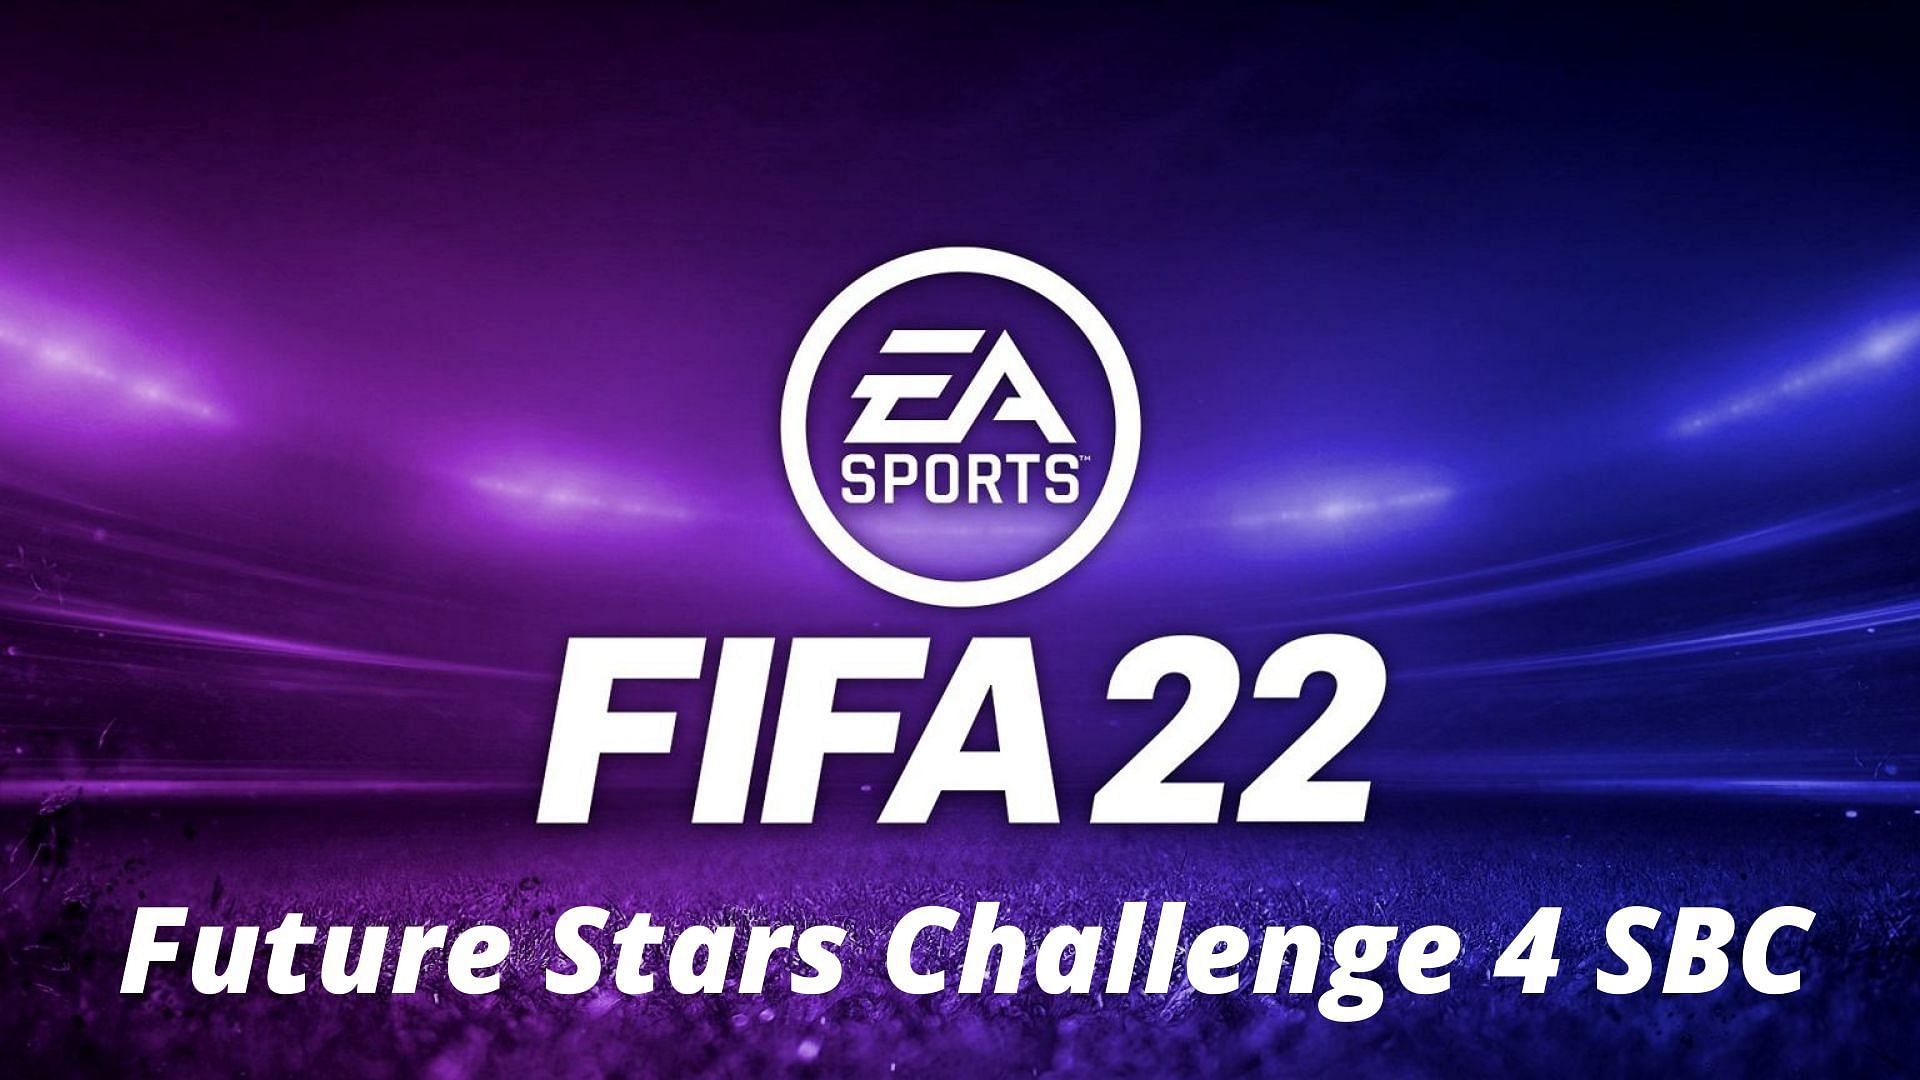 Future Stars Challenge 4 SBC is now live in FIFA 22 (Image via Sportskeeda)